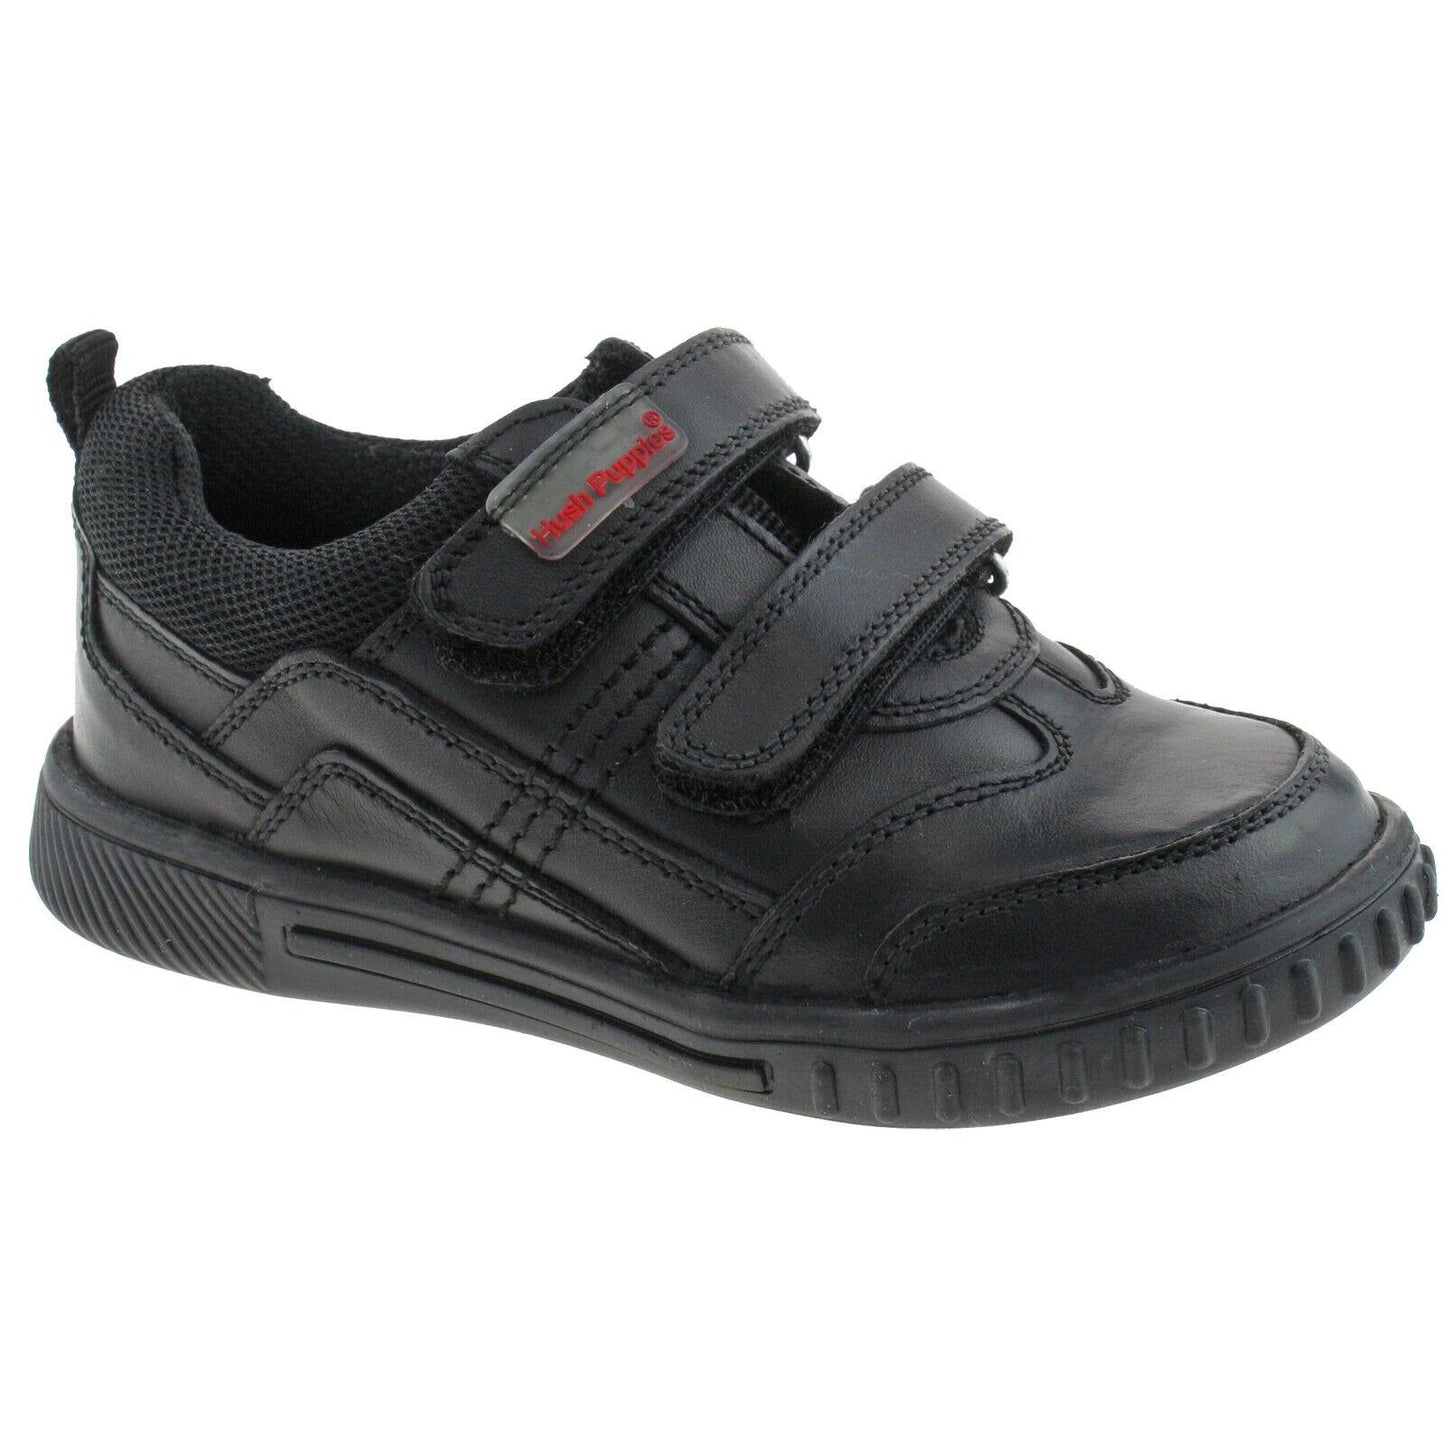 Boys Hush Puppies Lionfish Black Leather Adjustable Double Strap School Shoes